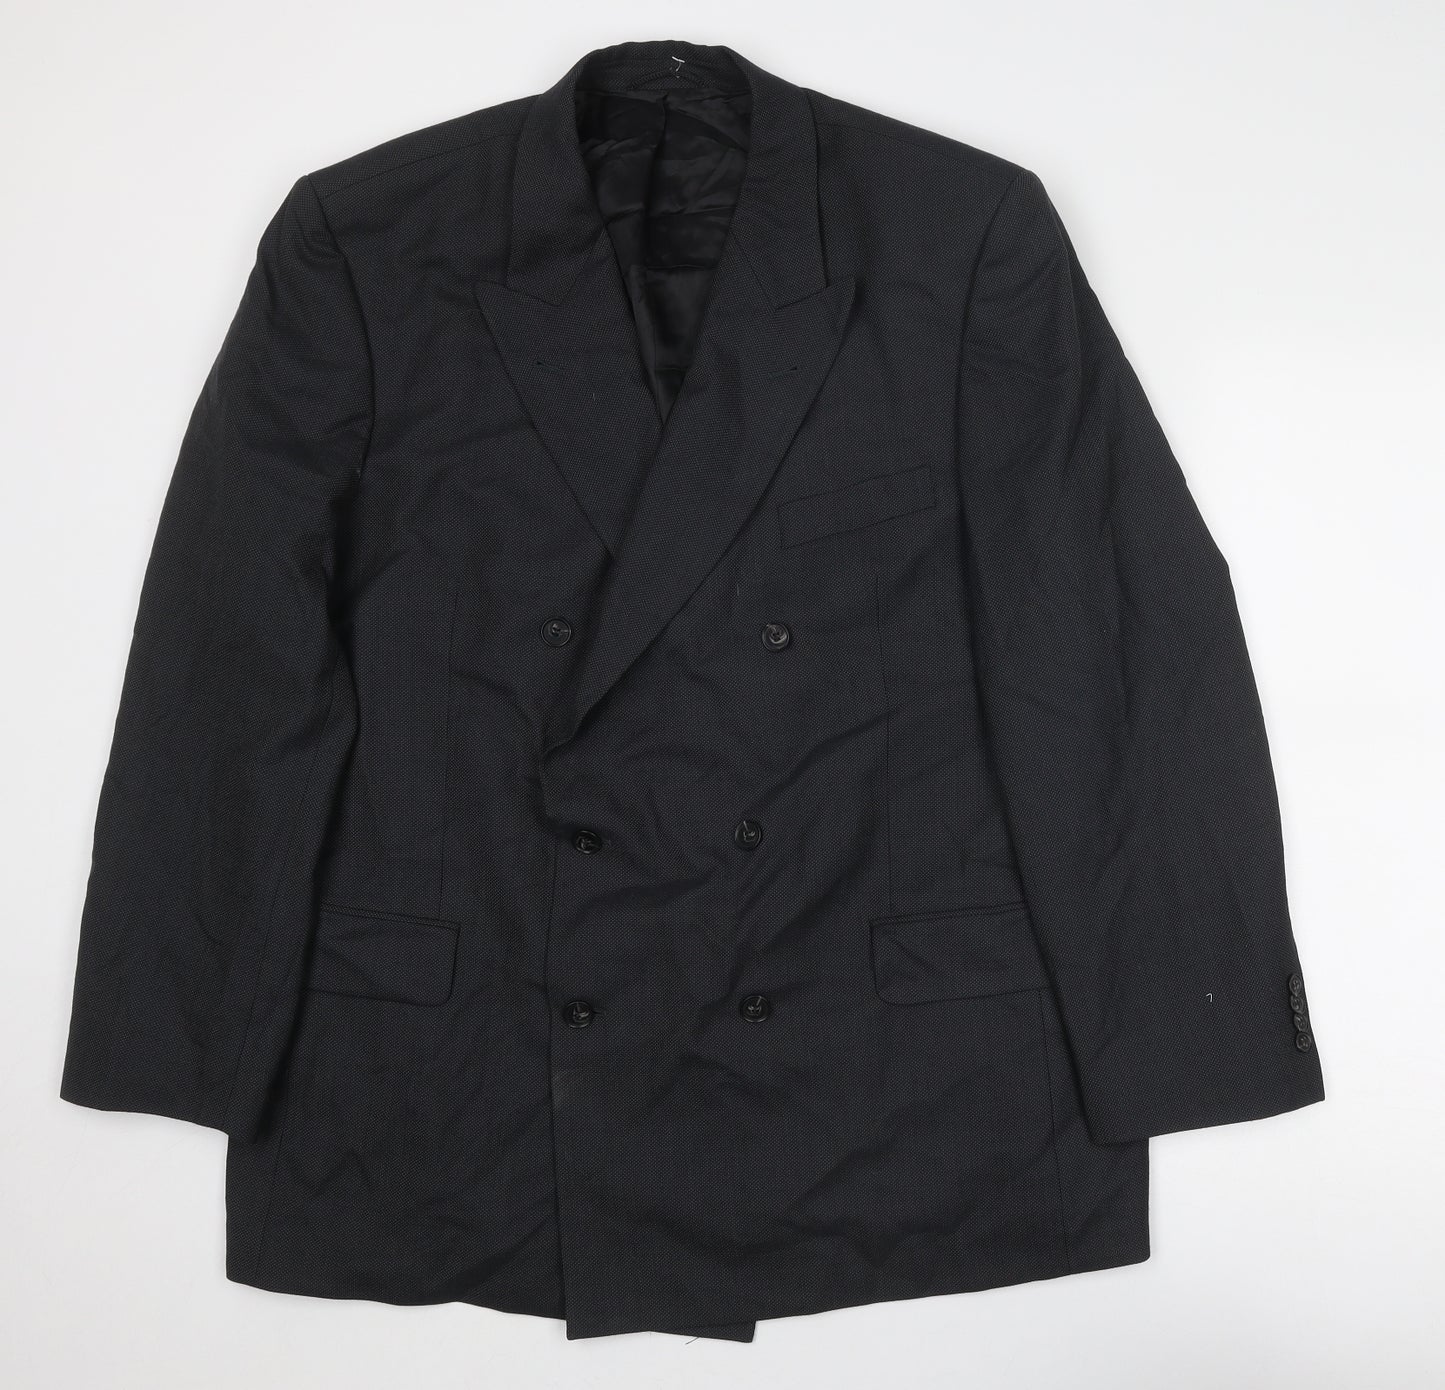 ROY ROBSON Mens Grey Polyester Jacket Suit Jacket Size 44 Regular